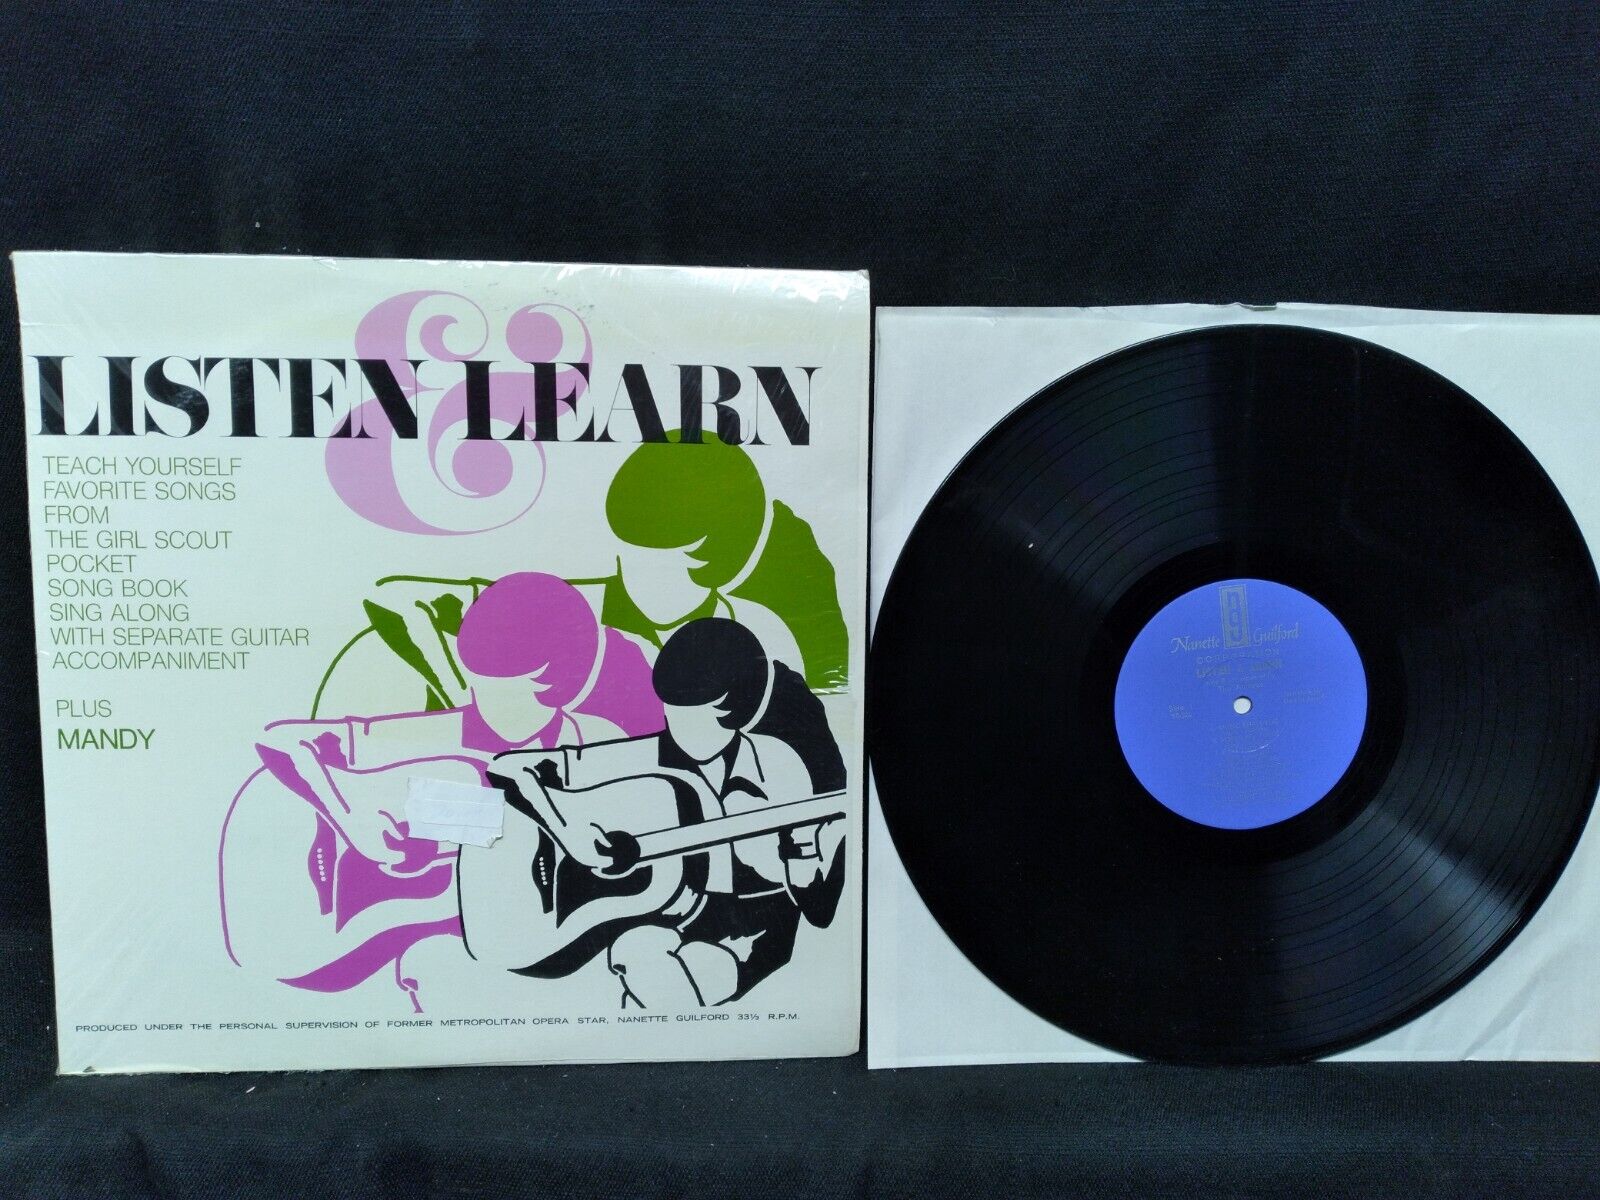 All Girl Scout Chorus Listen & Learn vinyl LP Nanette Guilford Corp. 11-989